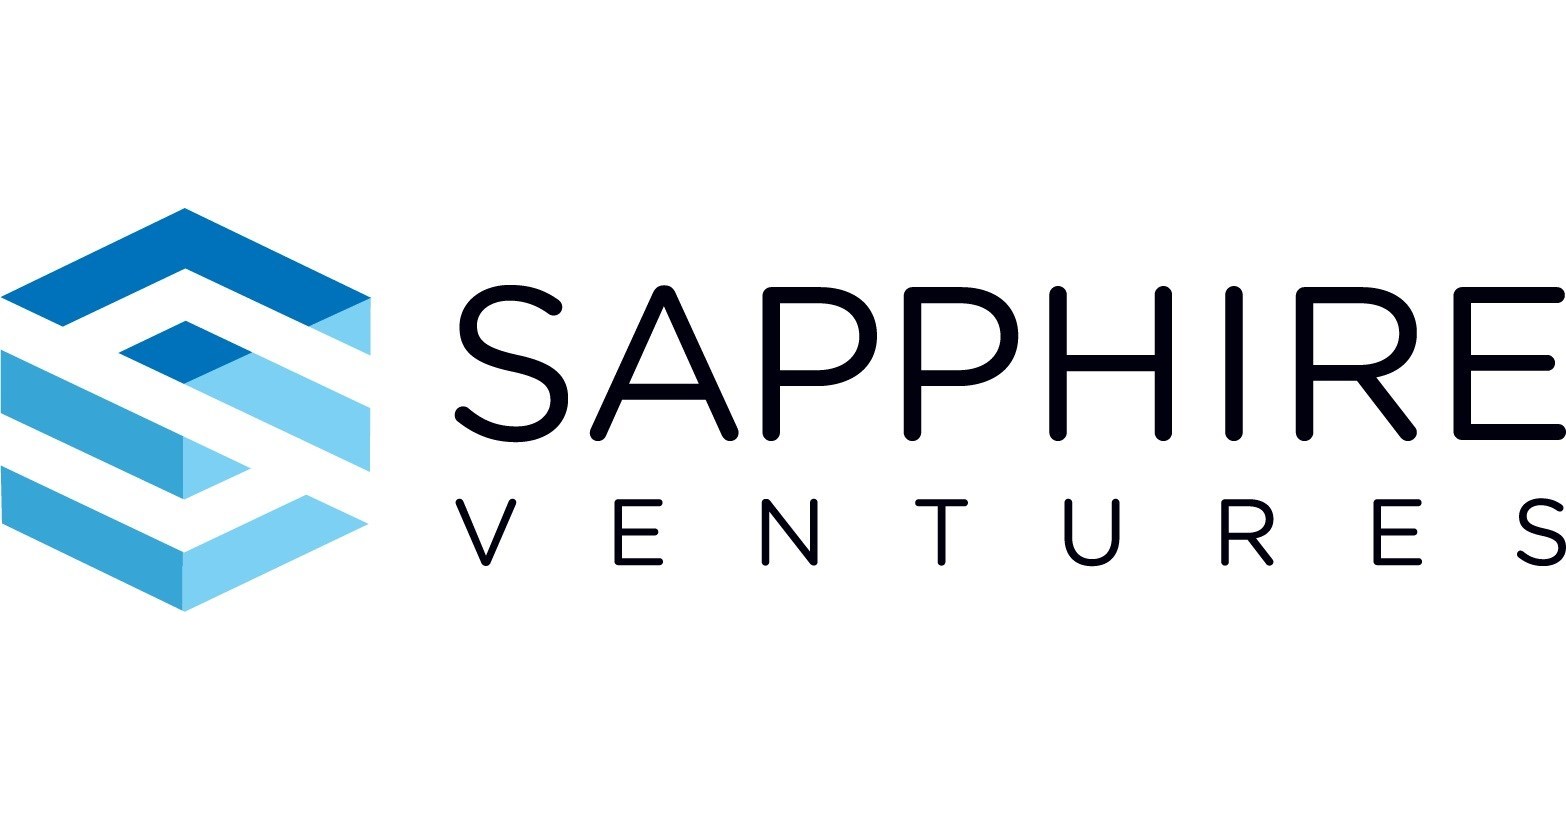 Sapphire ventures company logo